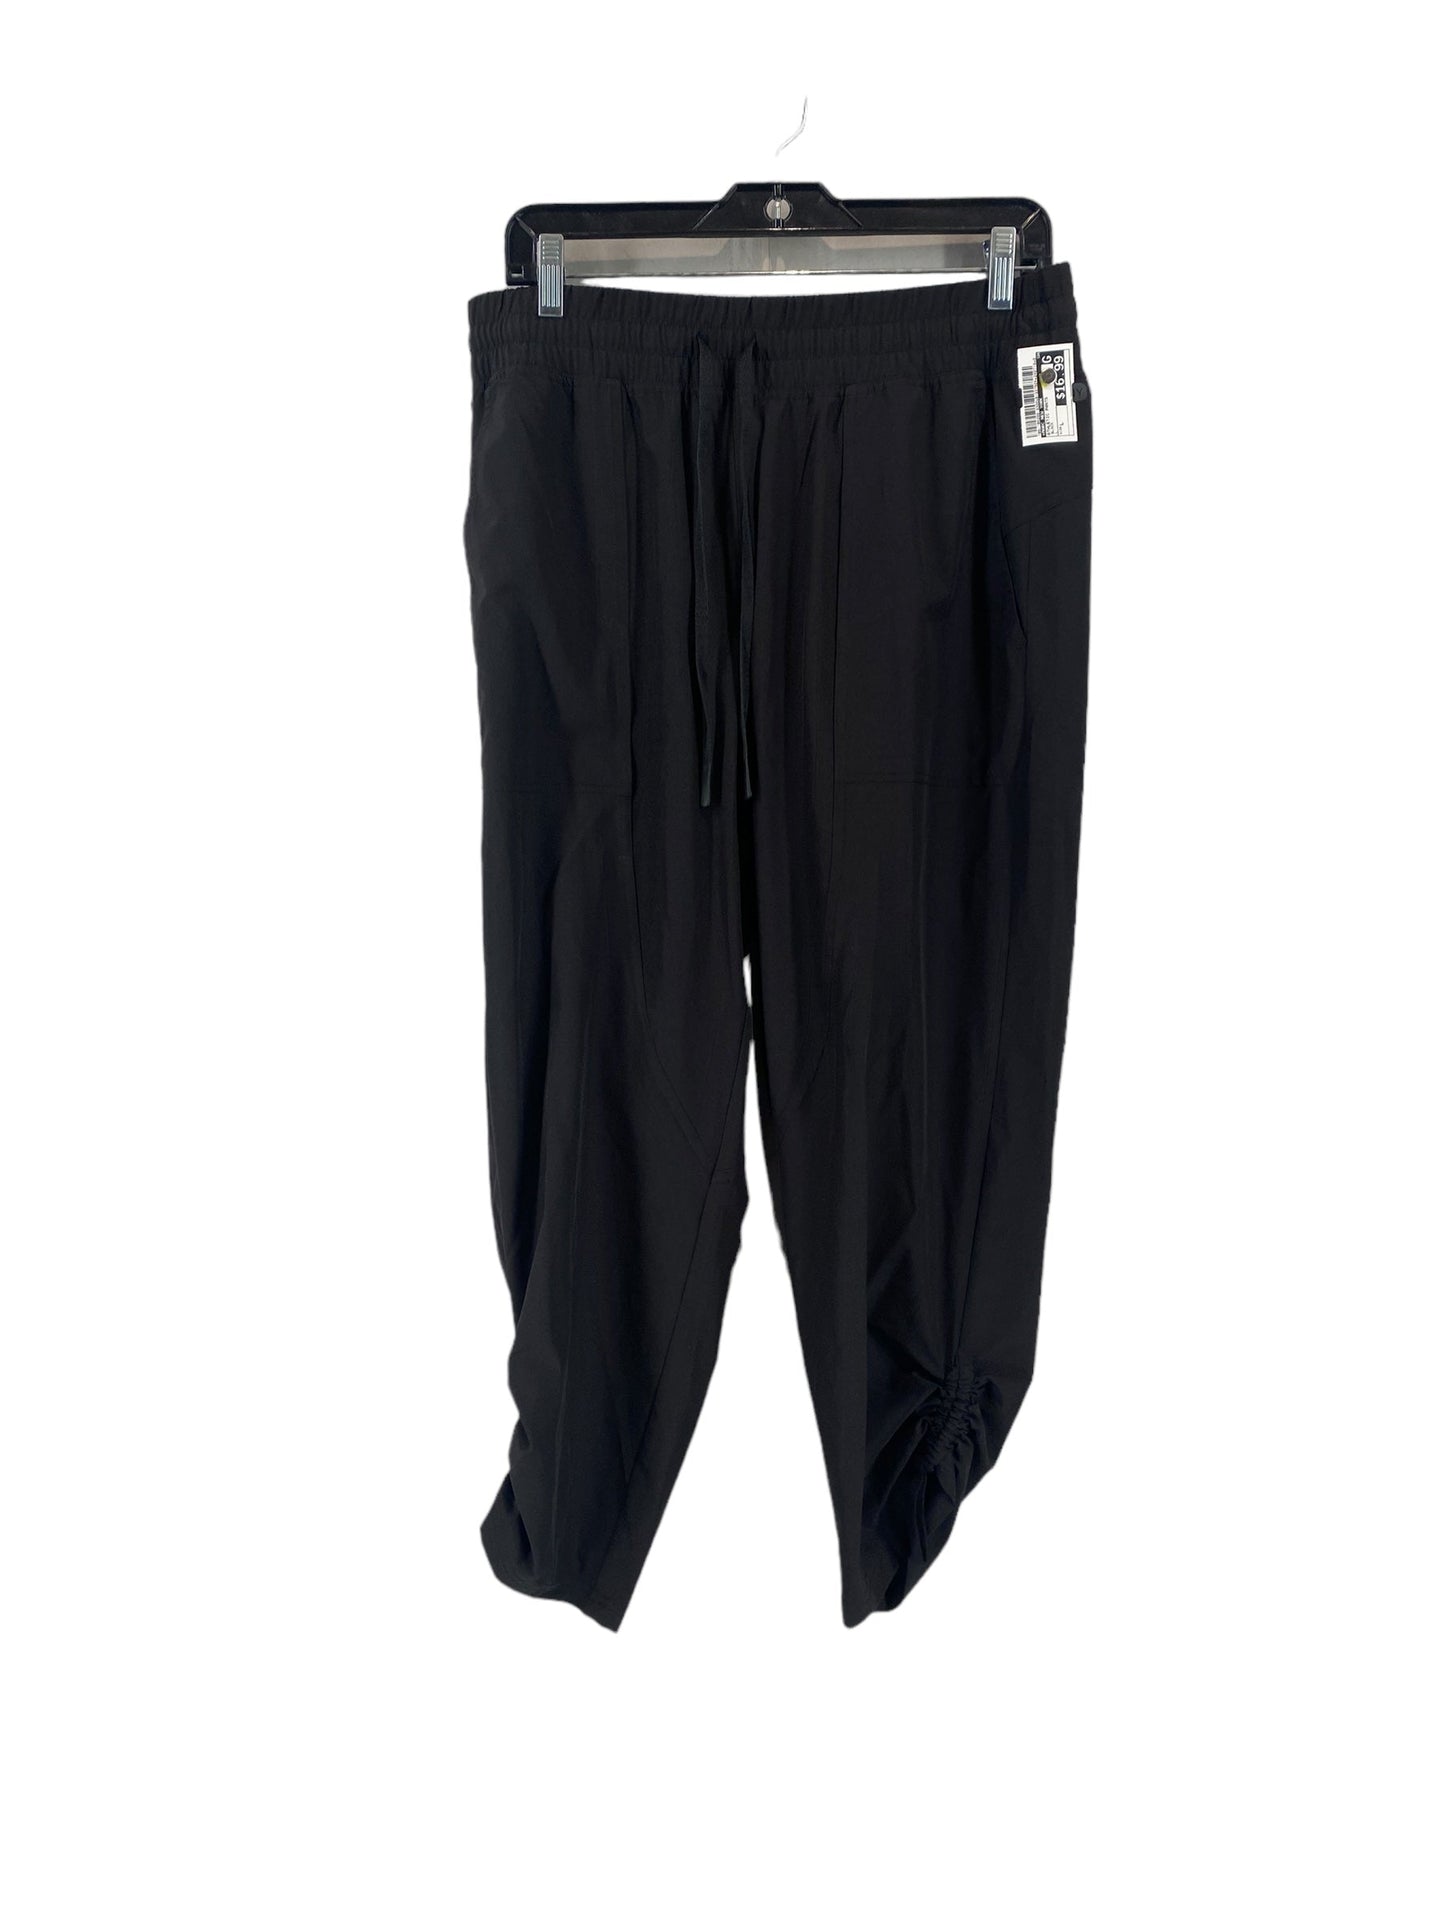 Black Athletic Pants Marc New York, Size L